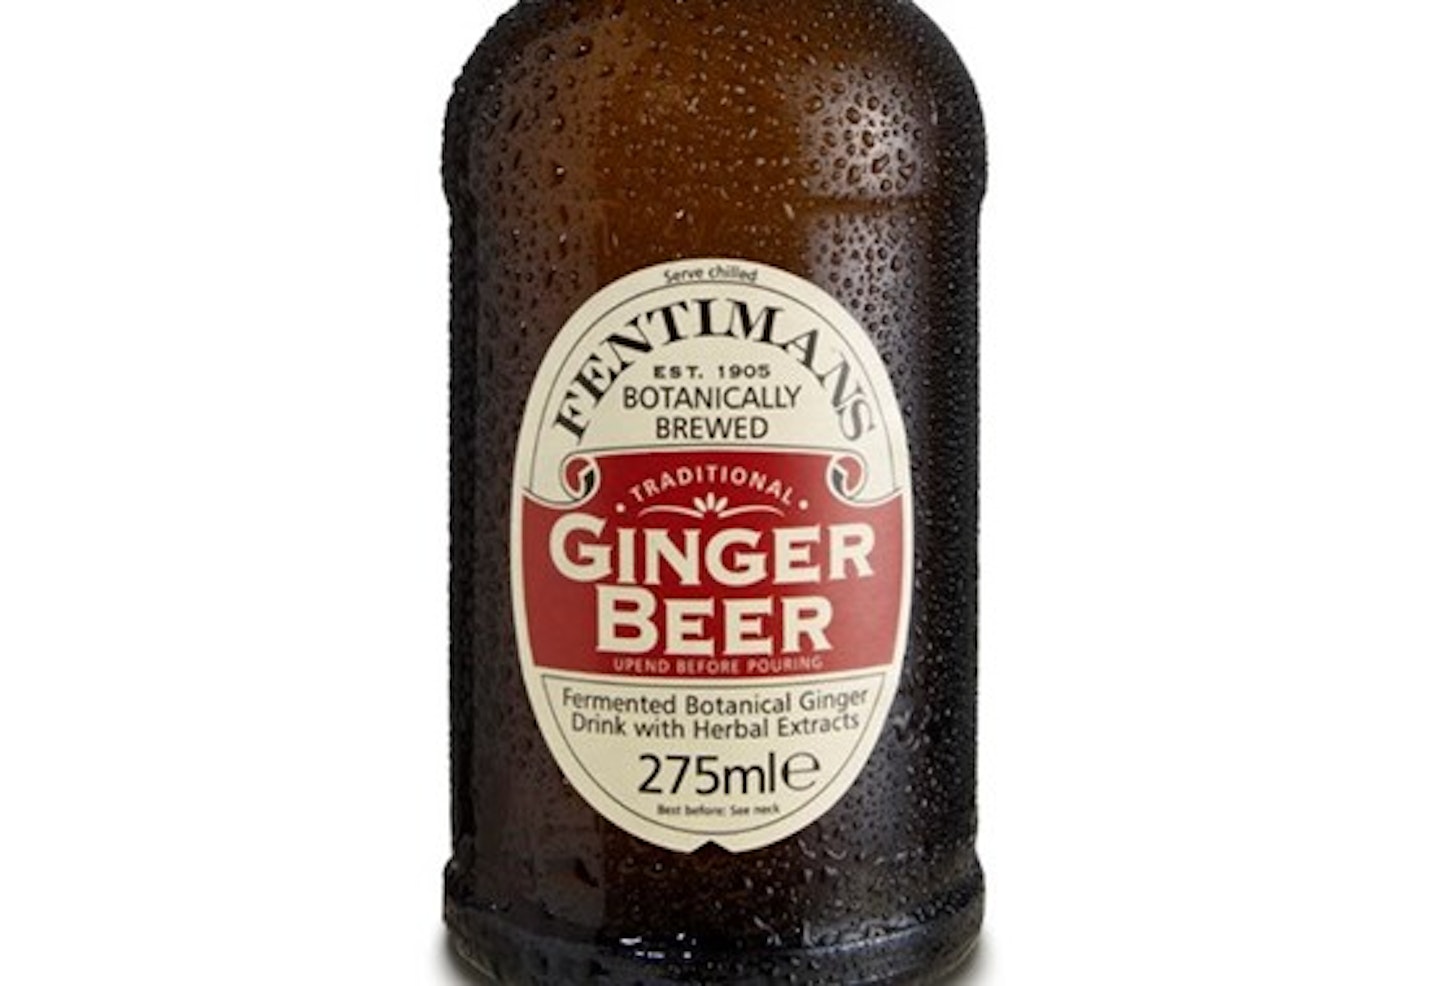 Fentiman's Ginger Beer, £1.19